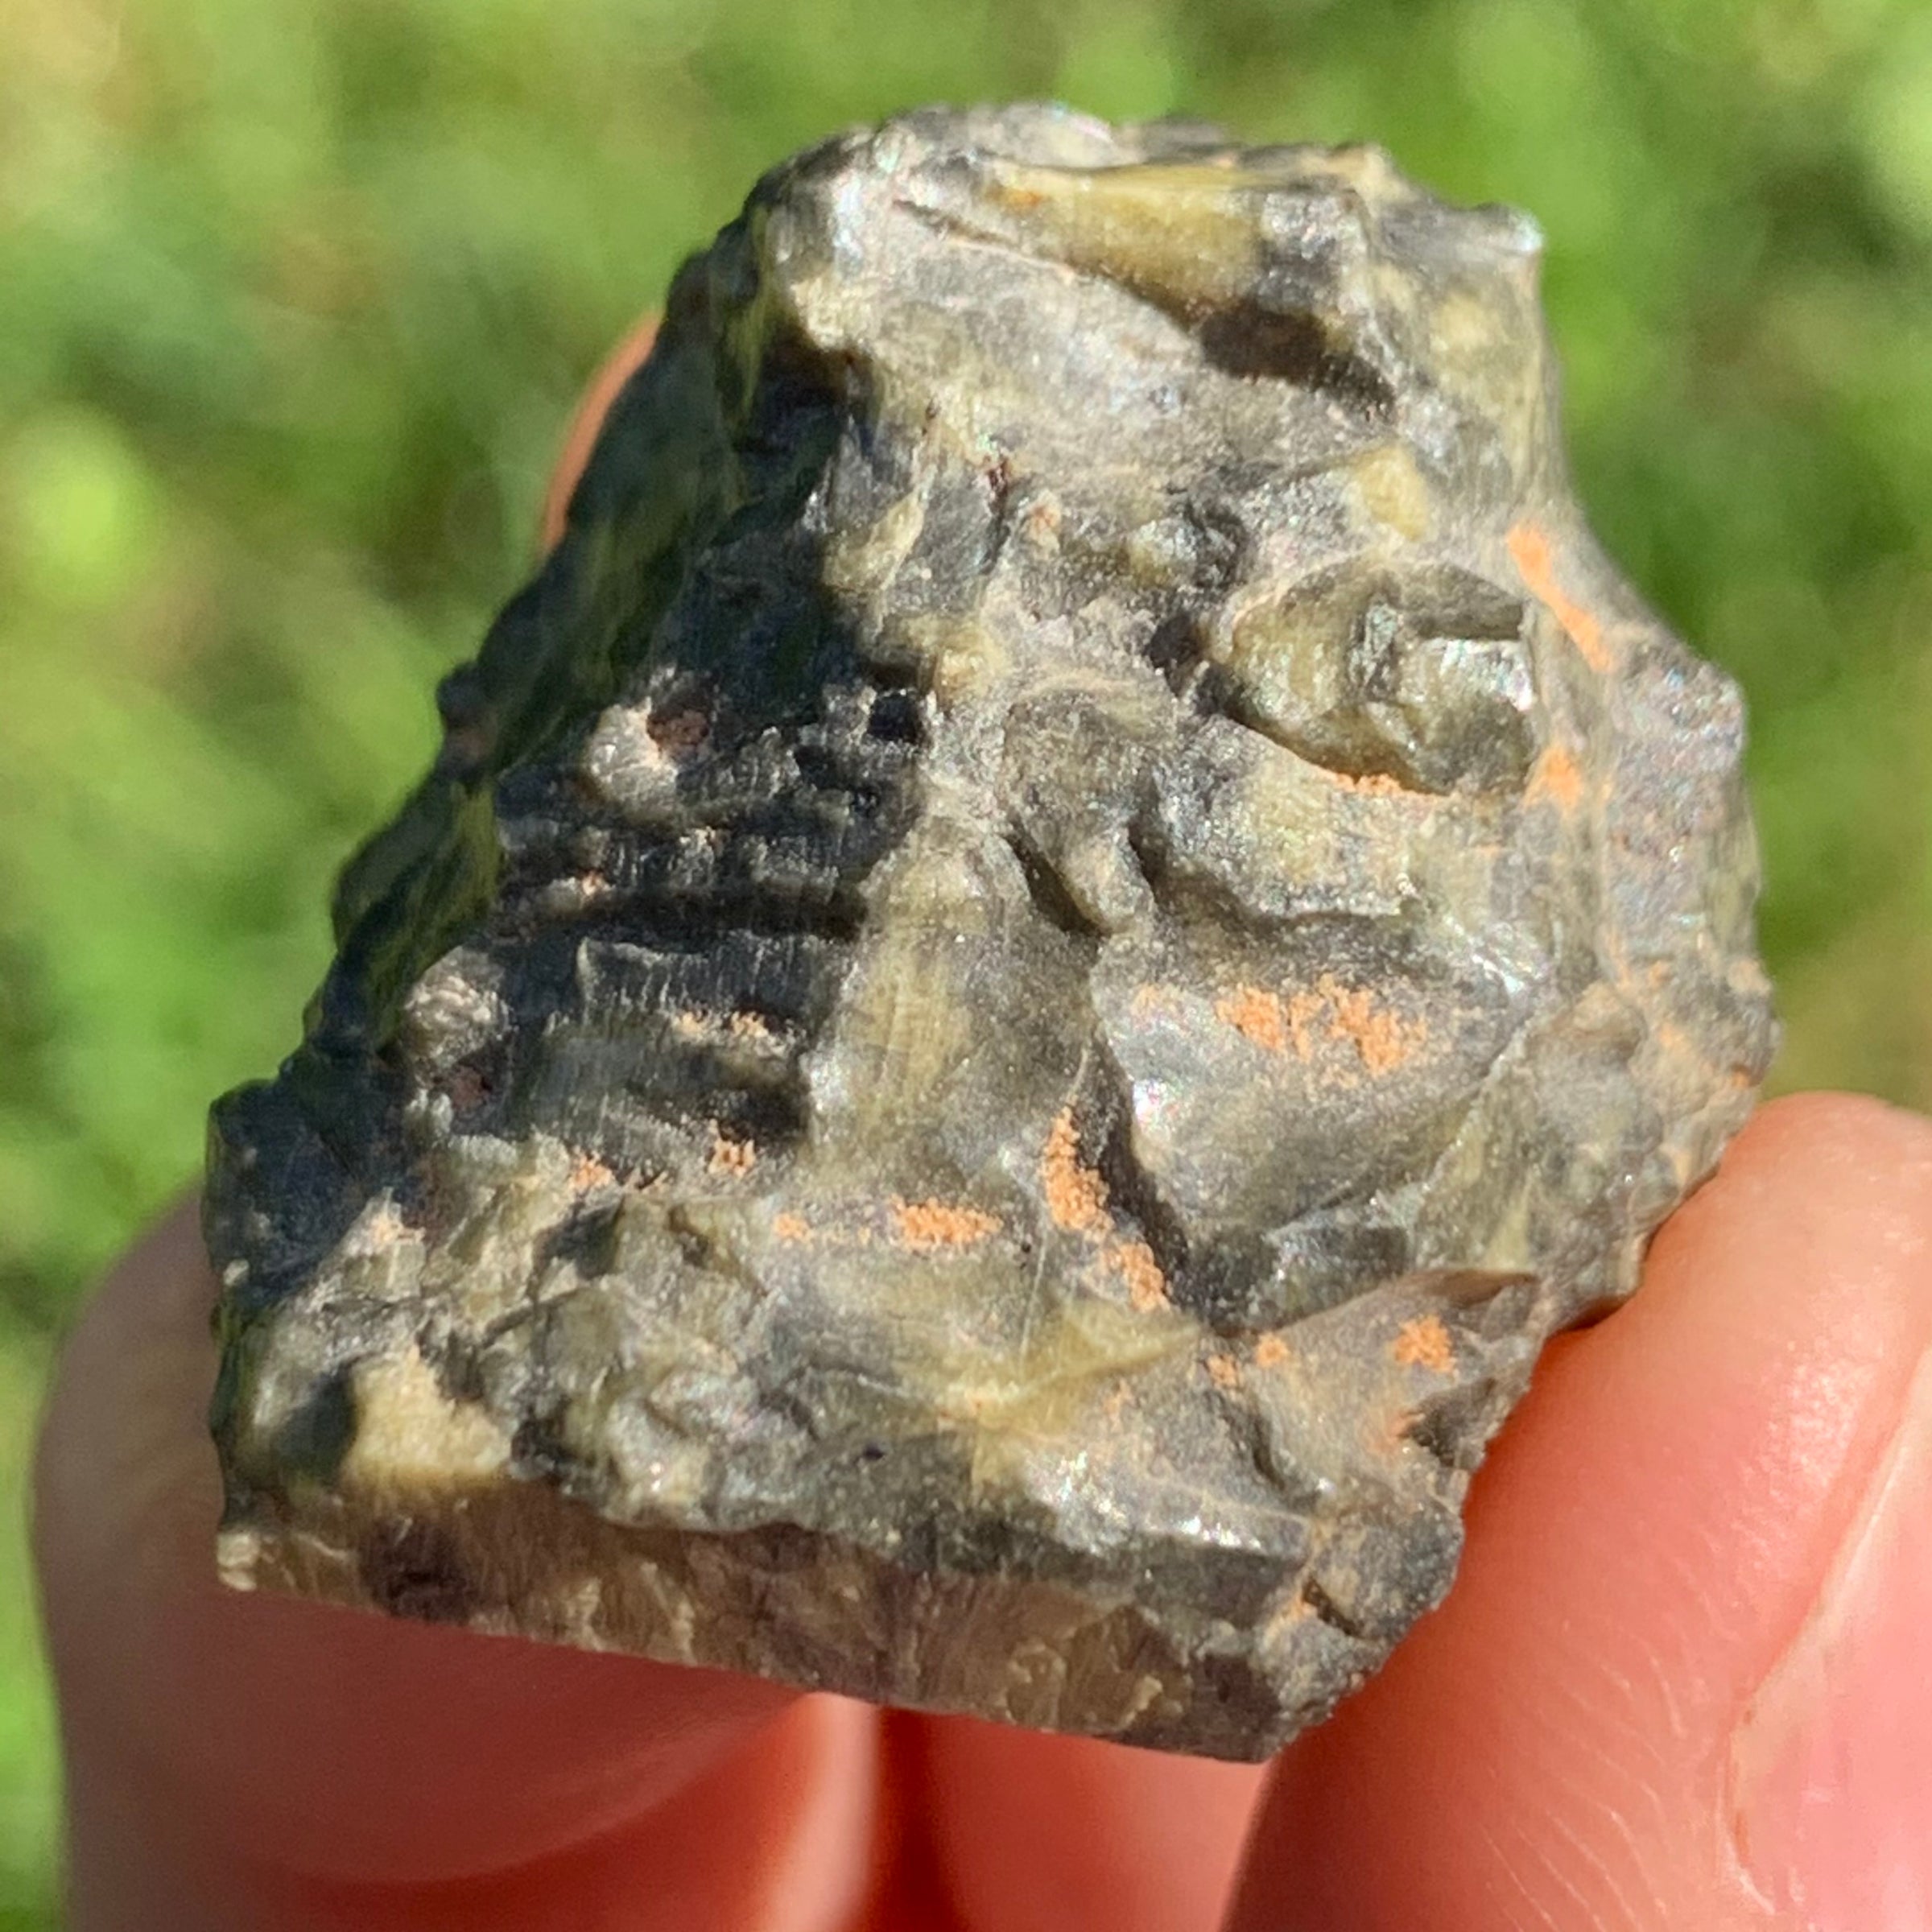 tatahouine meteorite held up on display to show details